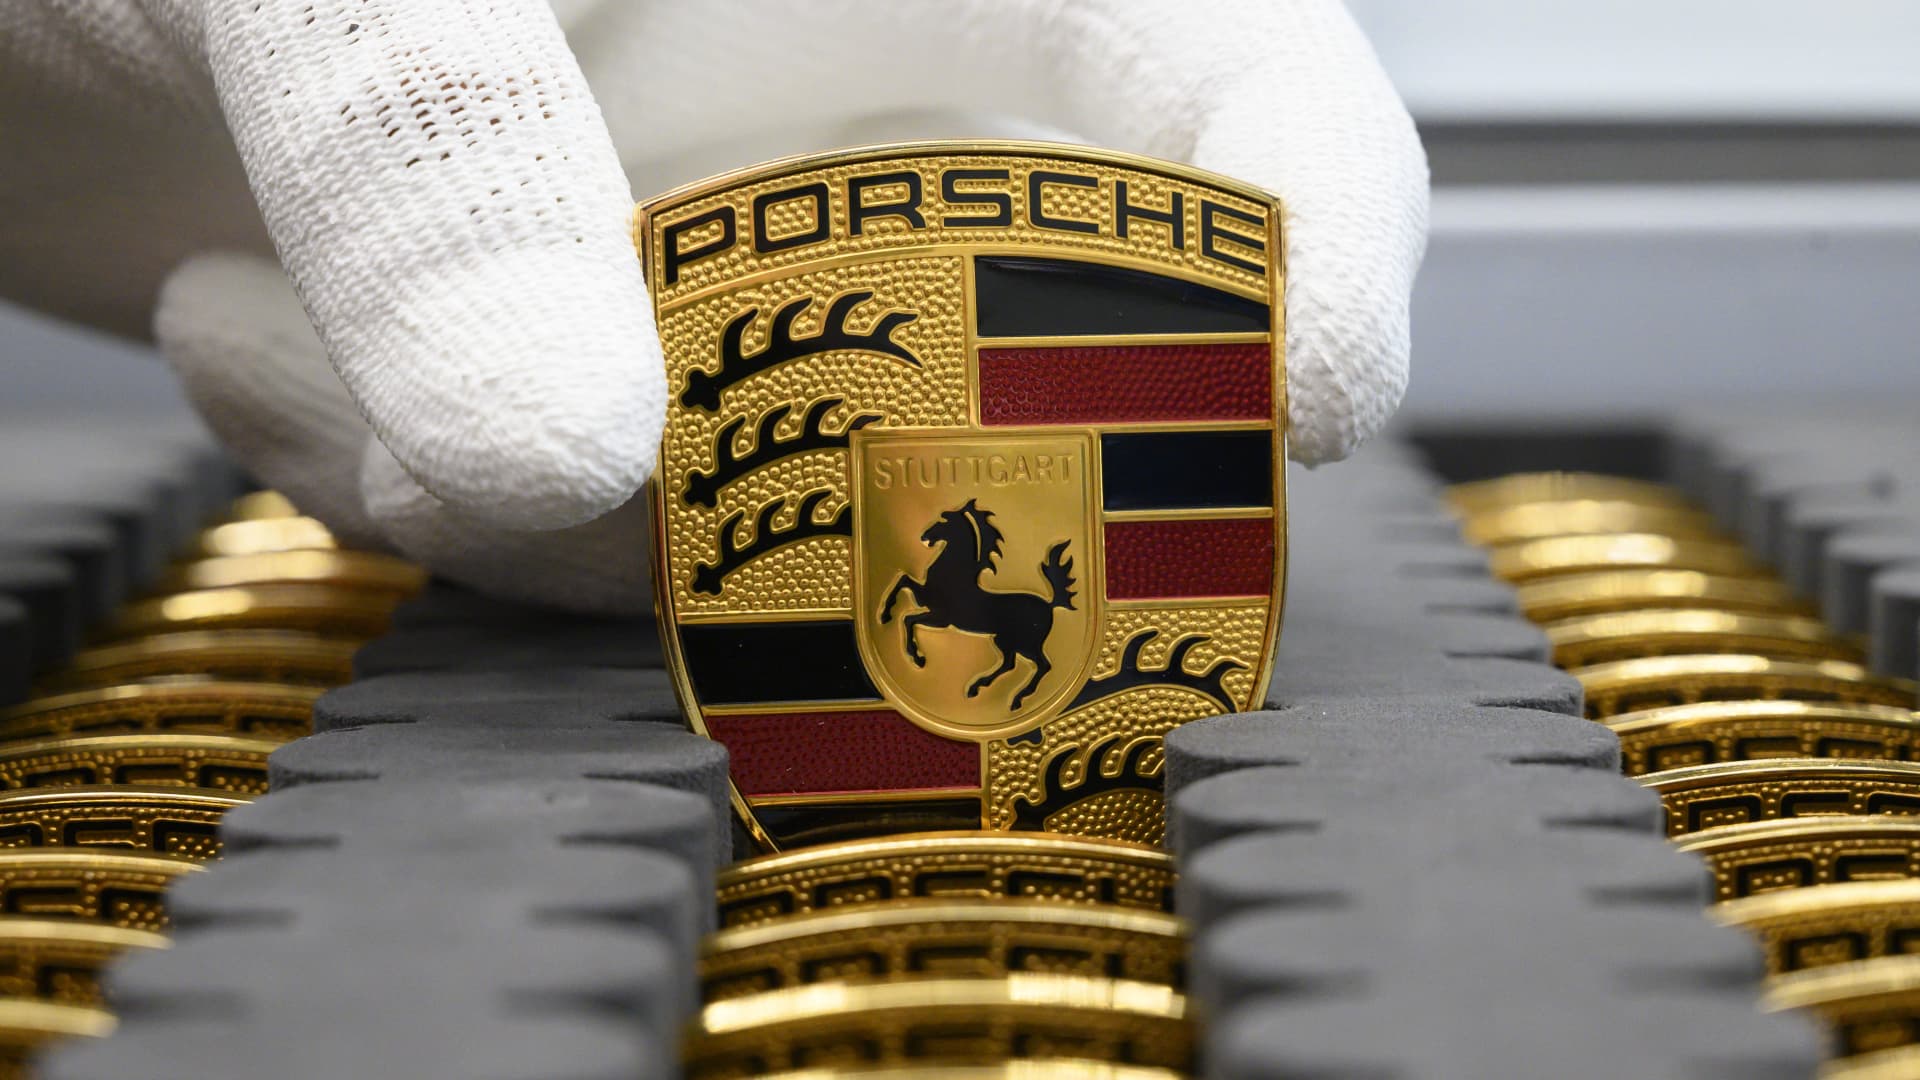 Porsche shares rise in landmark Frankfurt debut